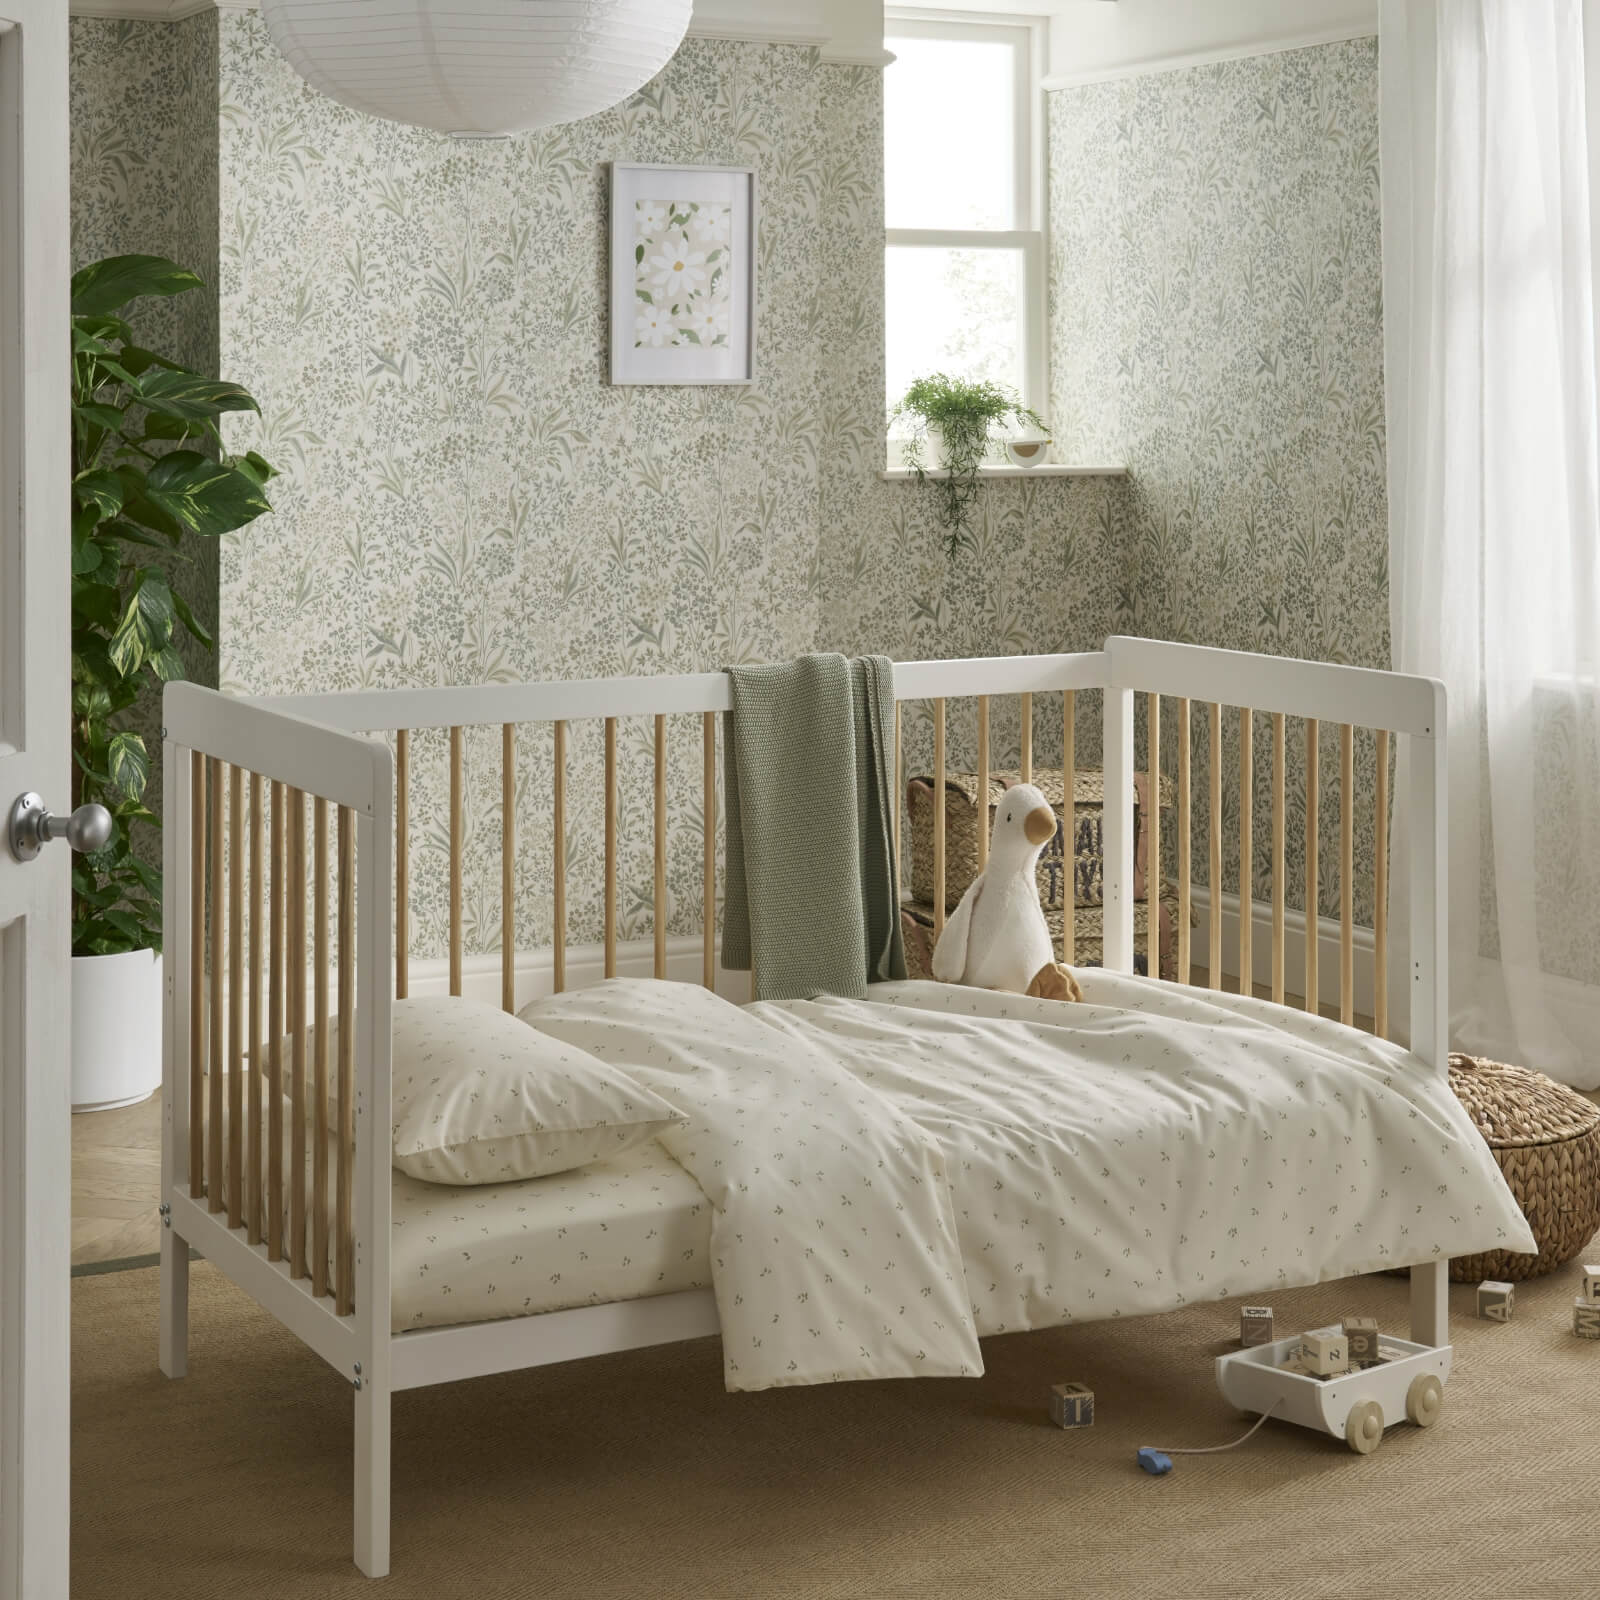 CuddleCo Nola 2 Piece Room Set in White & Natural Nursery Room Sets